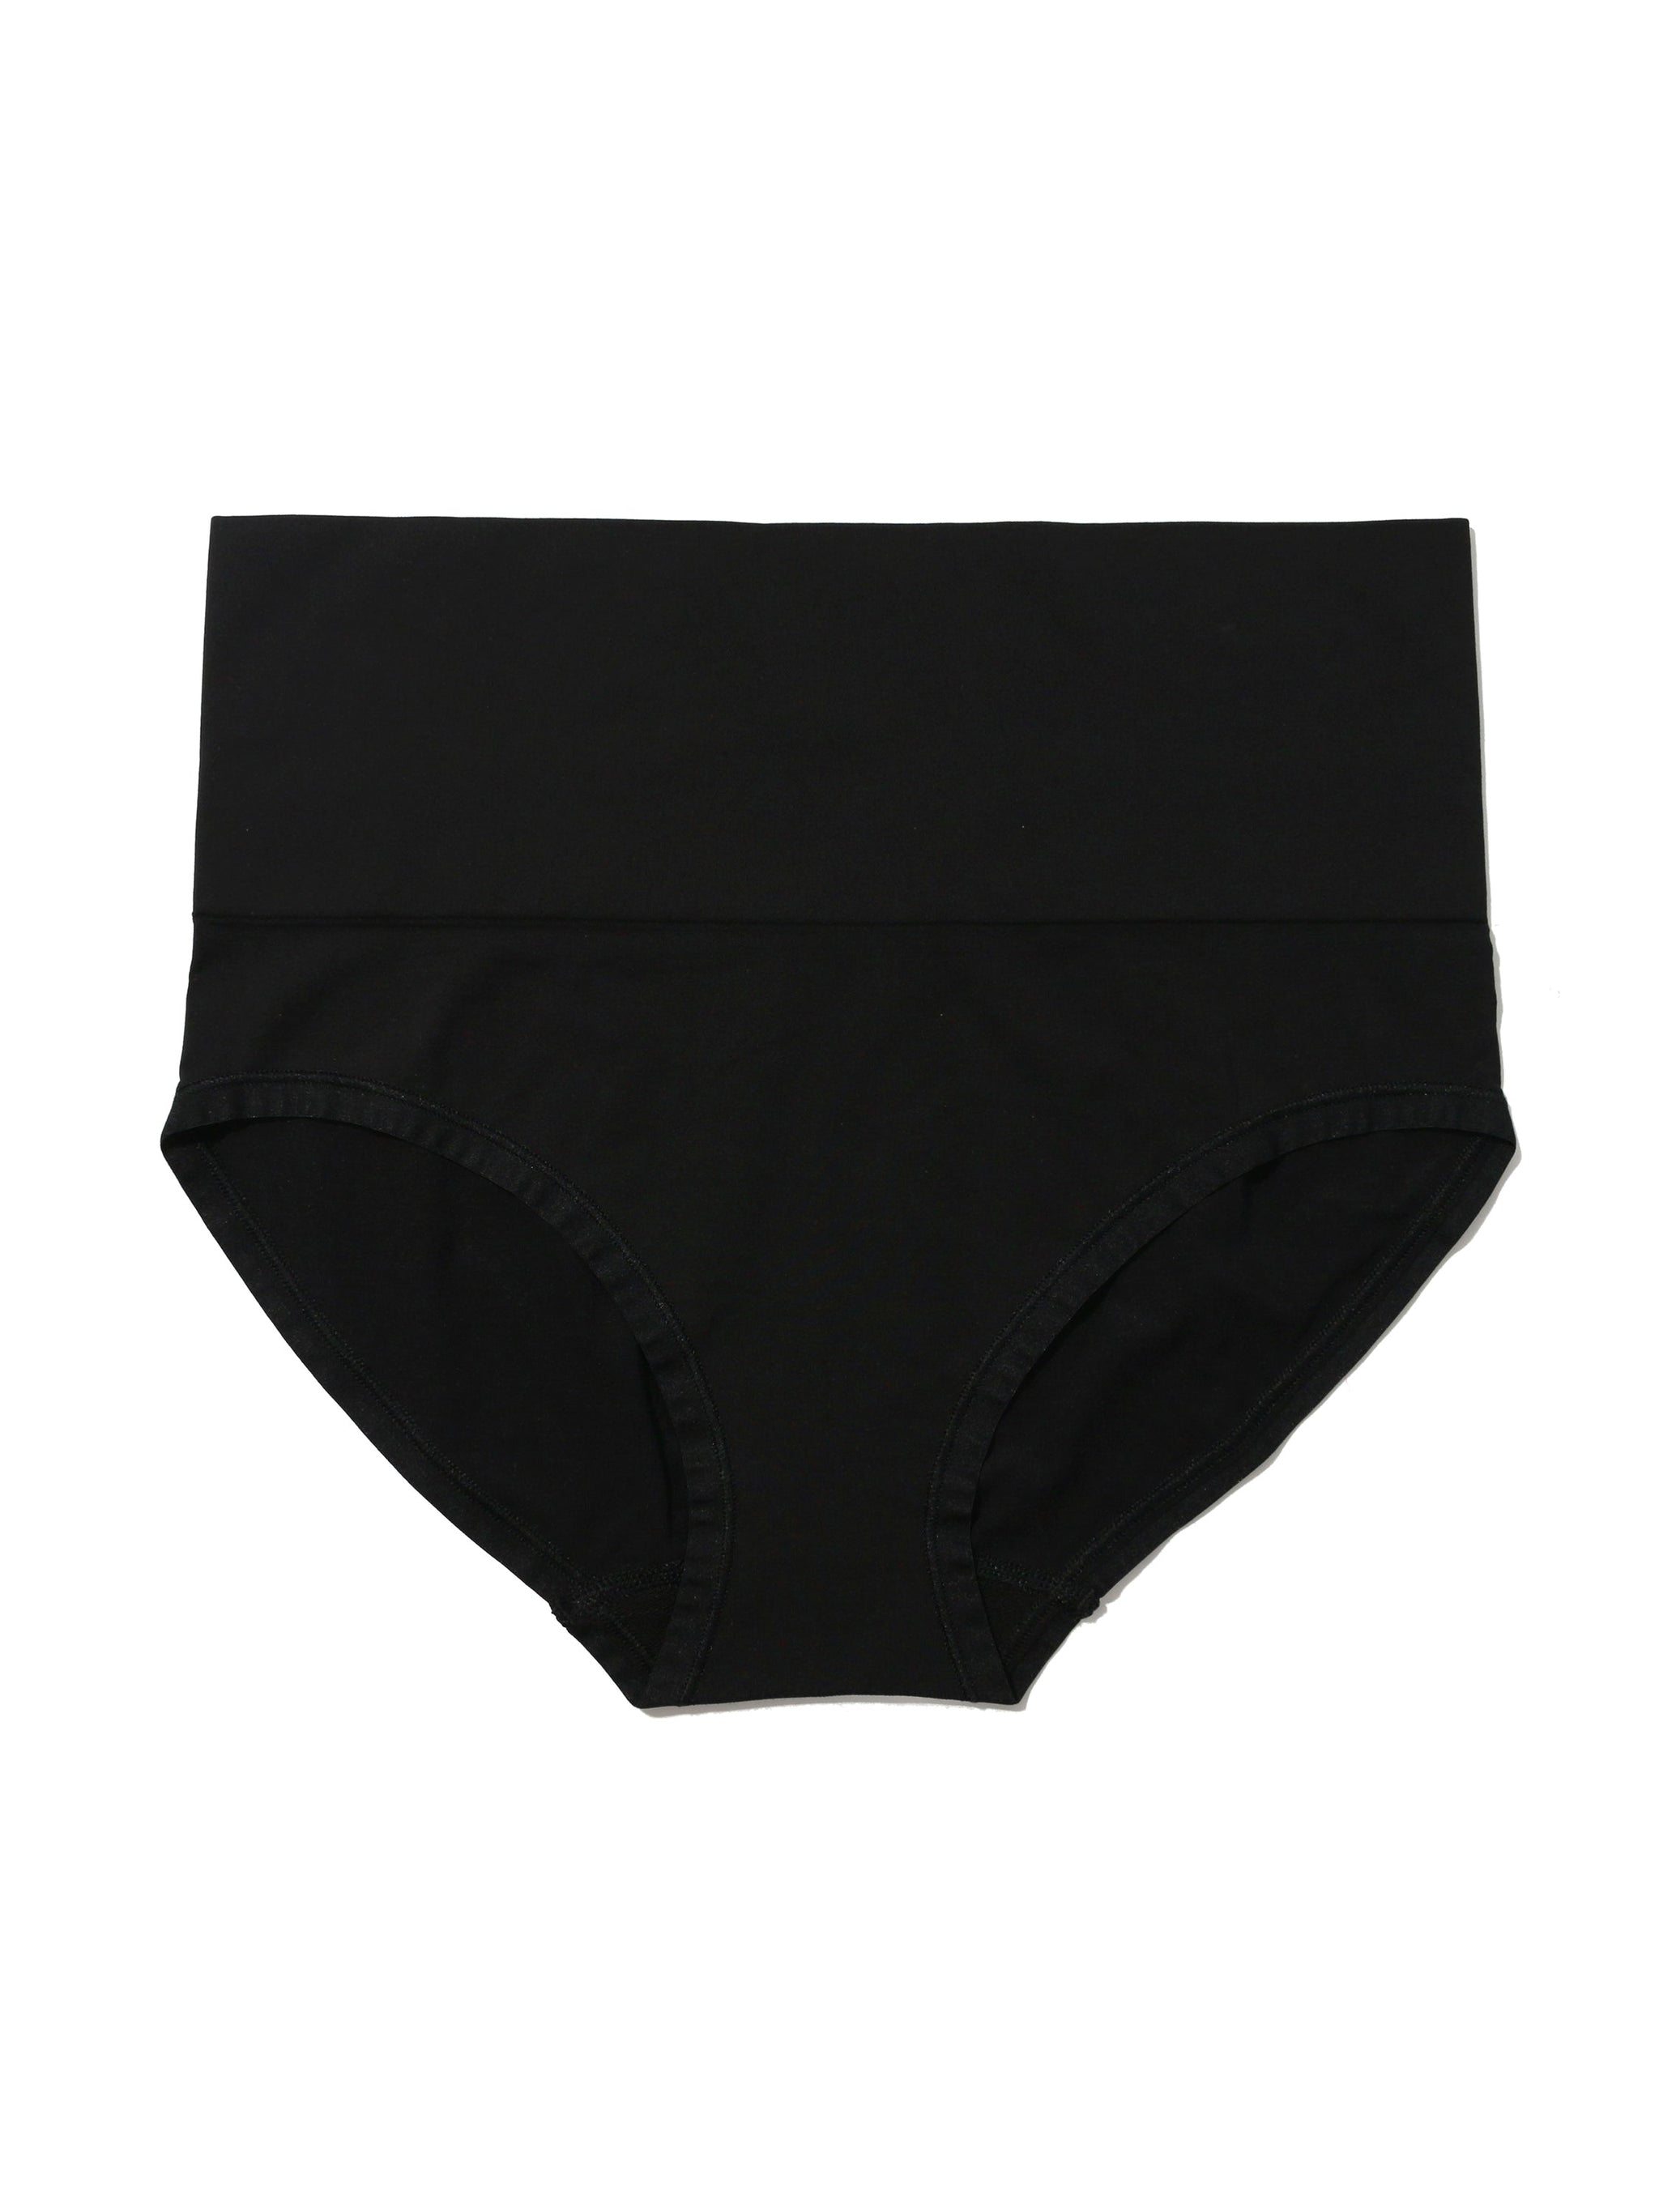 QWERTYU Women's Cheeky High Leg Underwear Sexy Lingerie Comfort Panty Soft  No Show Tanga S